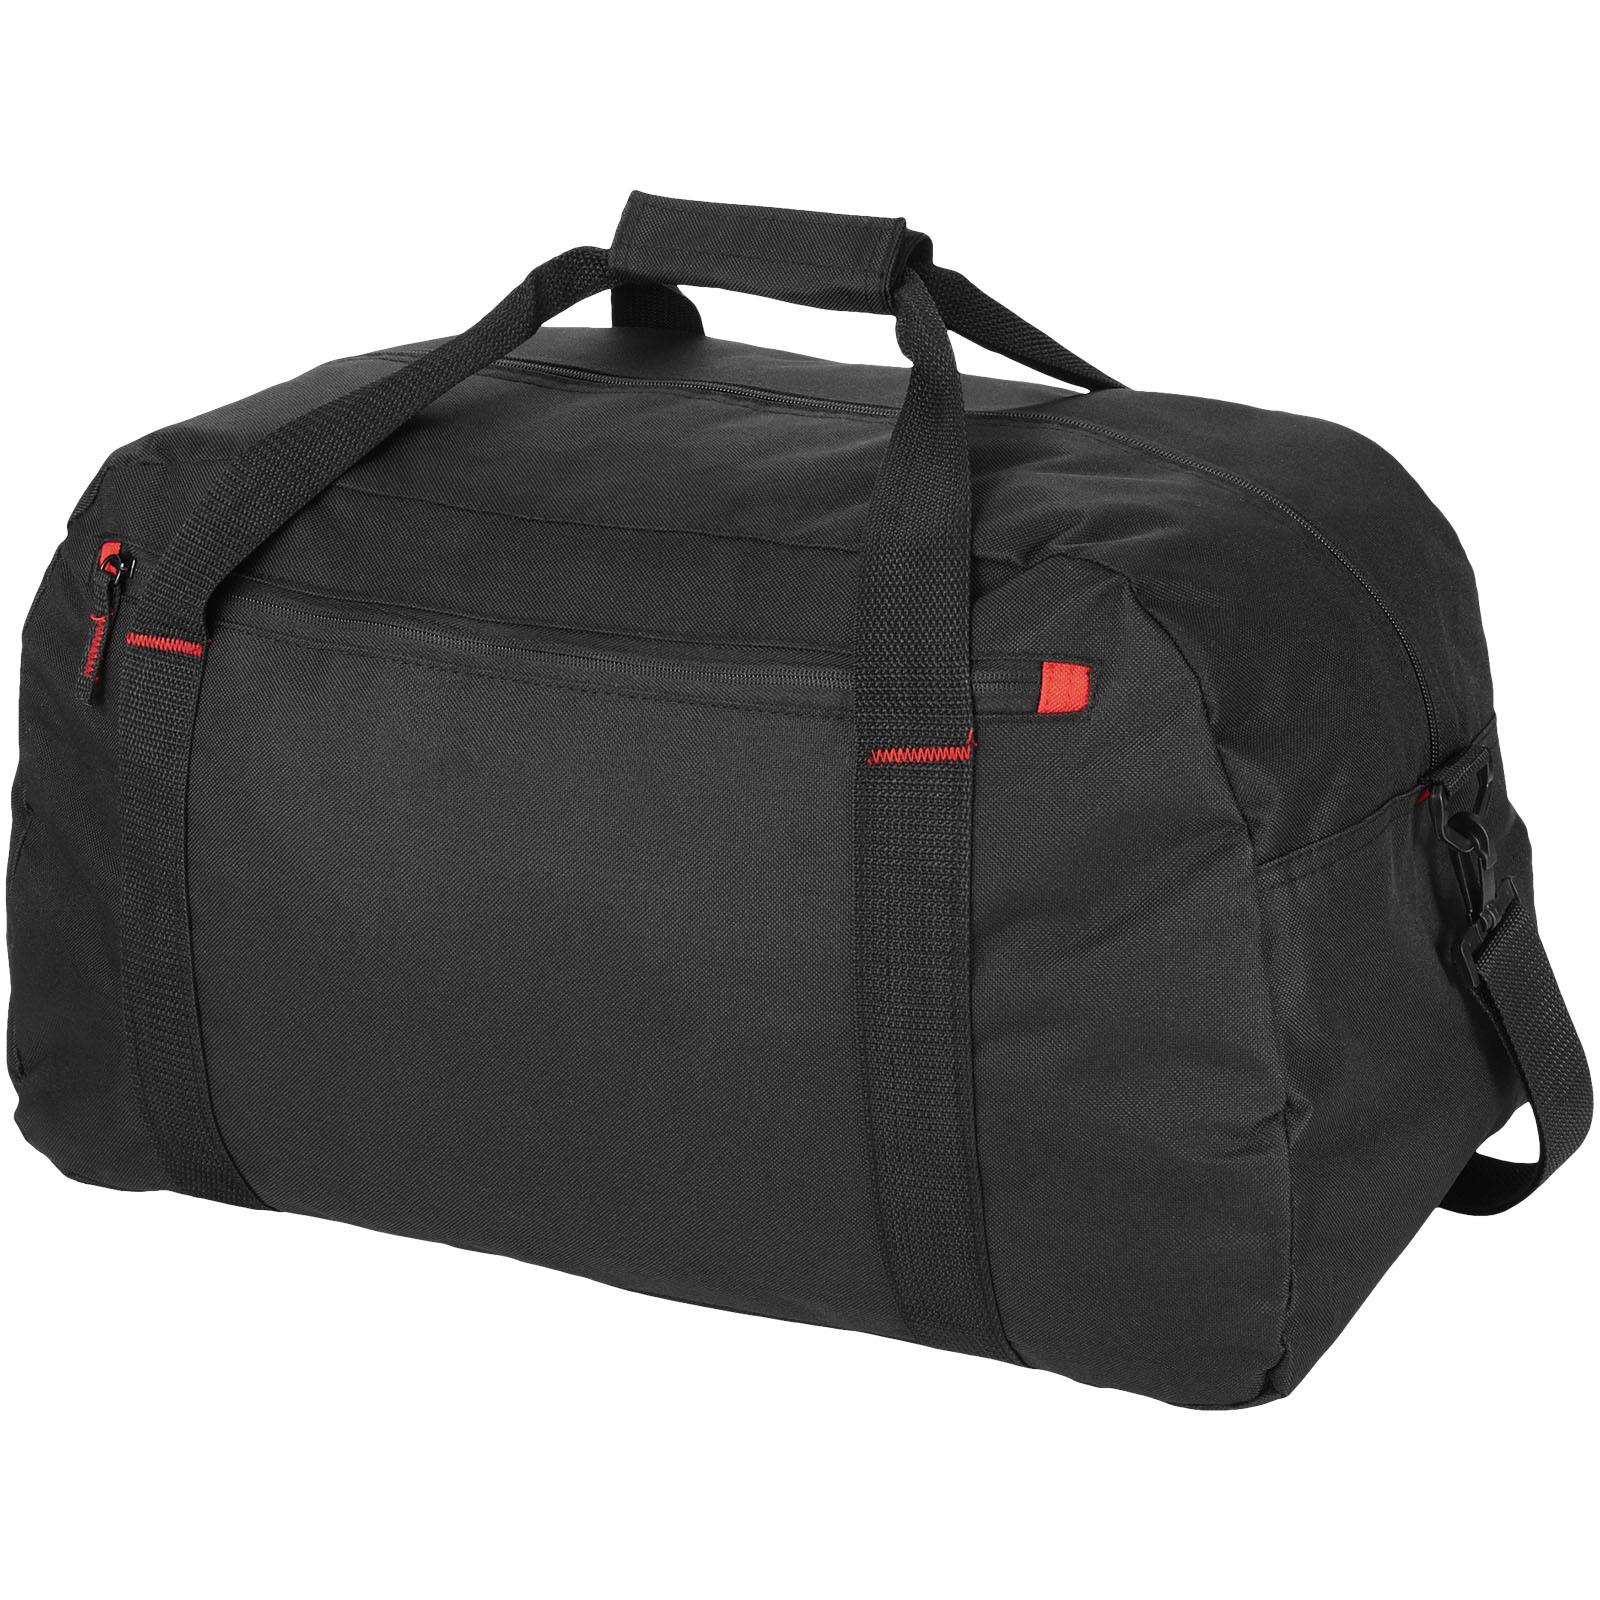 Advertising Travel bags - Vancouver travel duffel bag 35L - 0